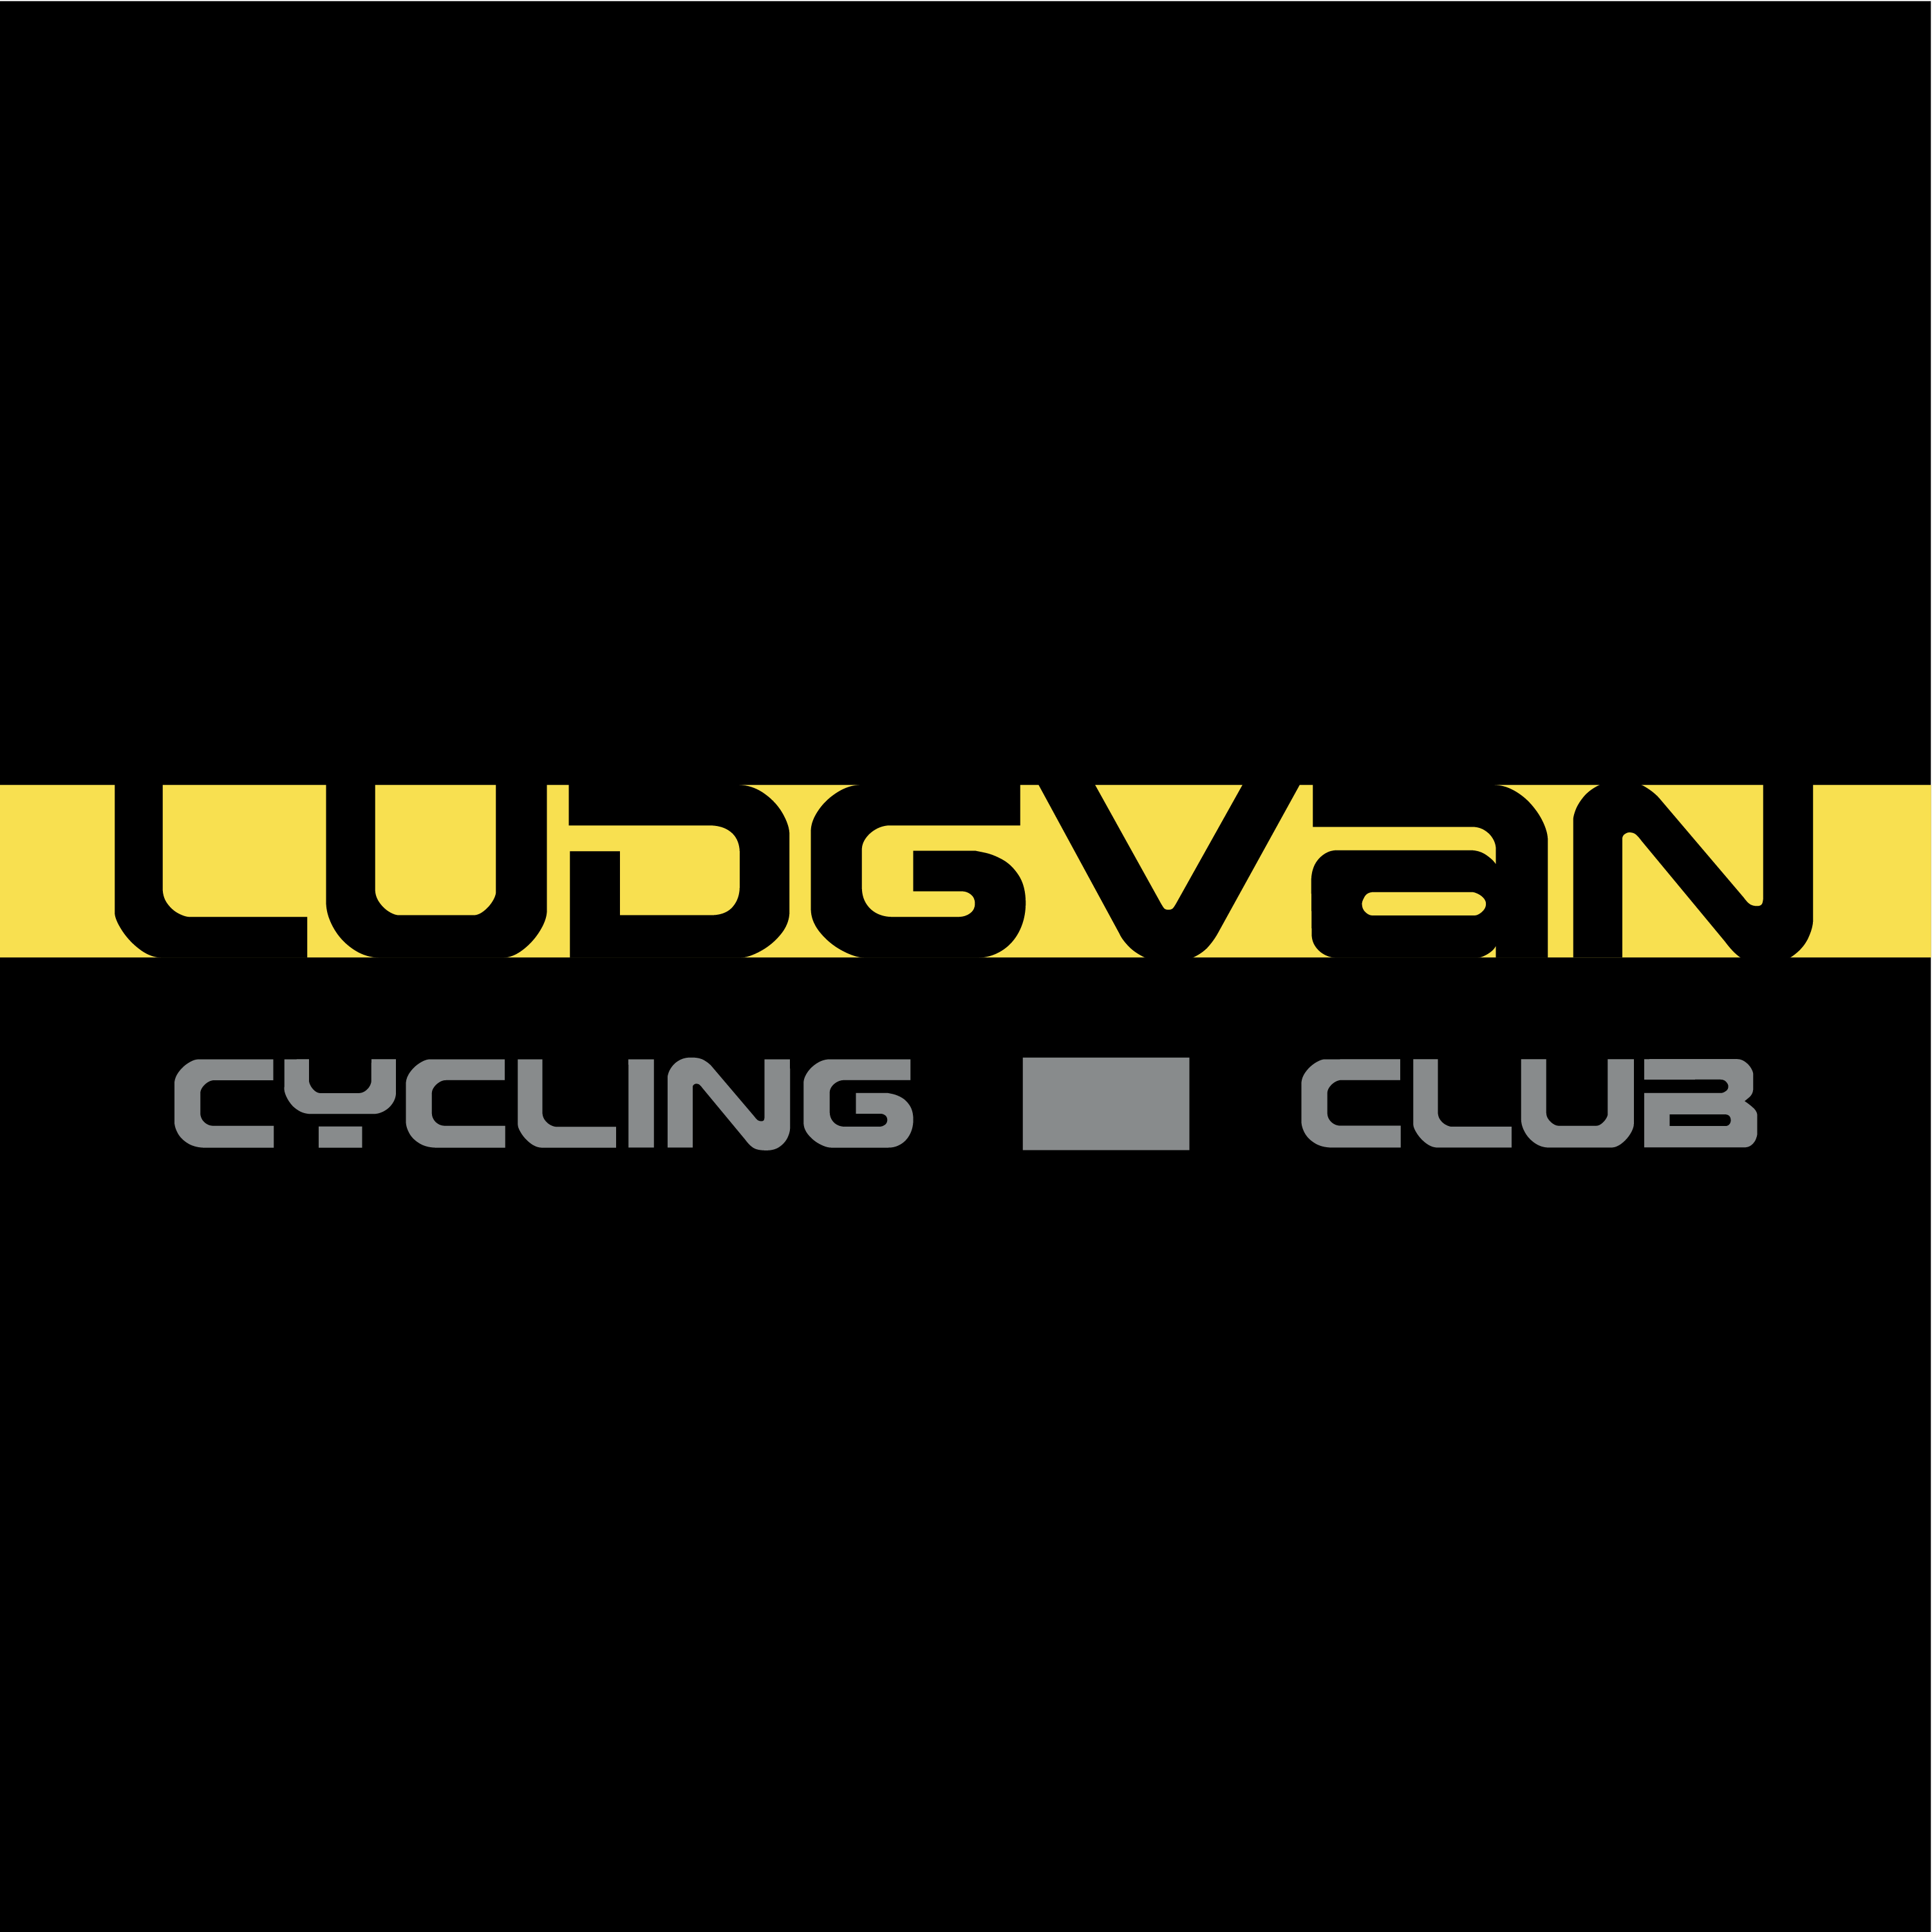 Club Image for LUDGVAN CC